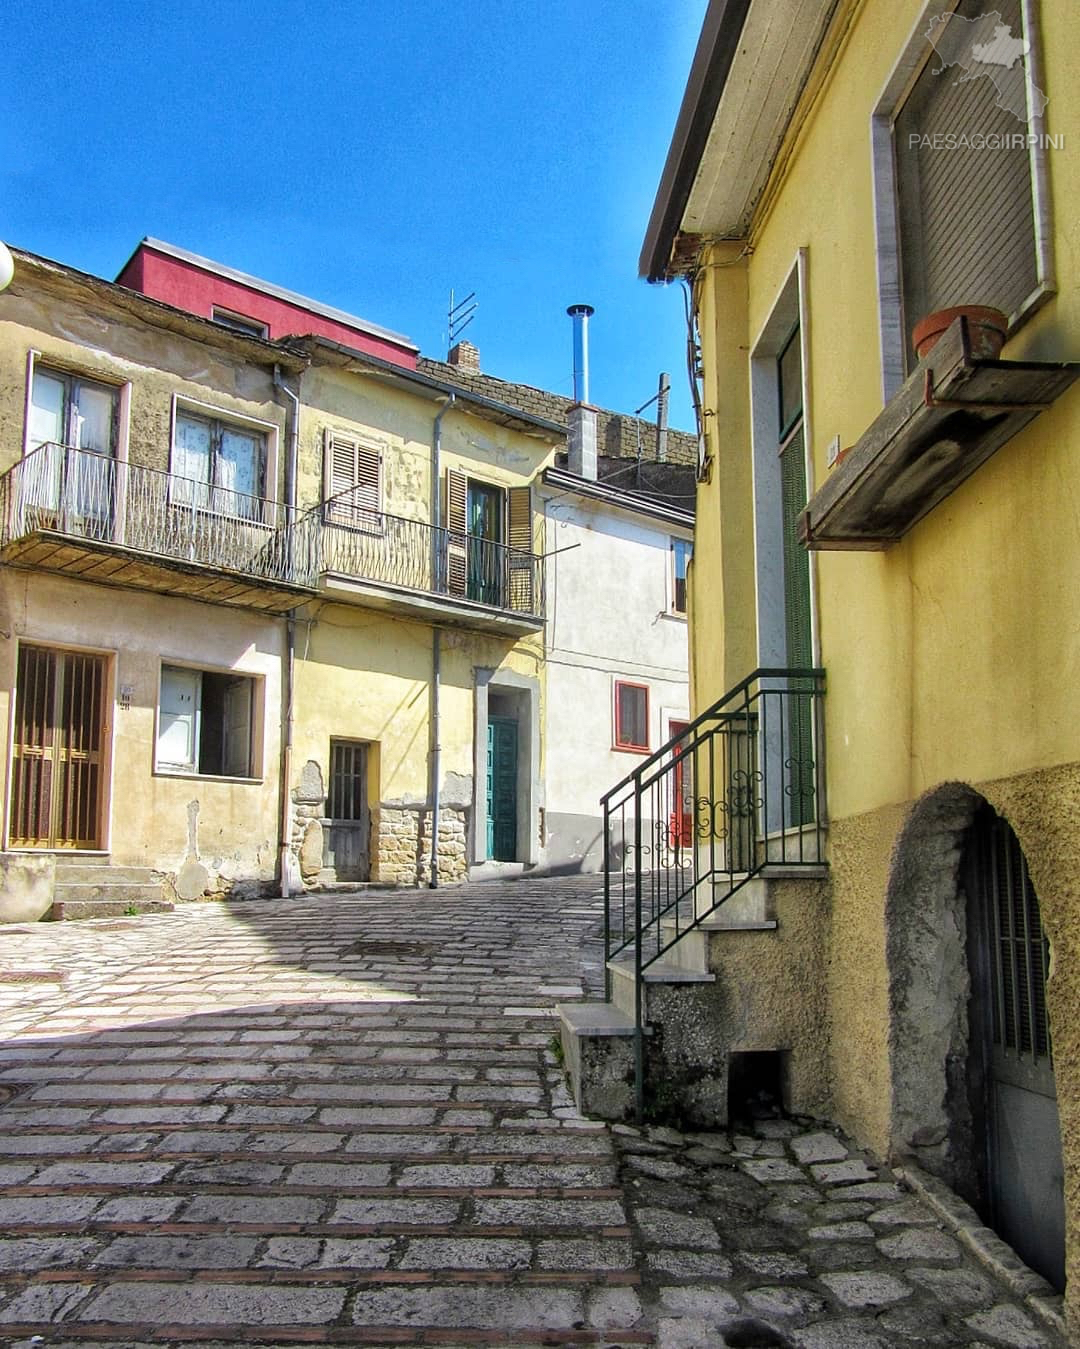 Bonito - Centro storico